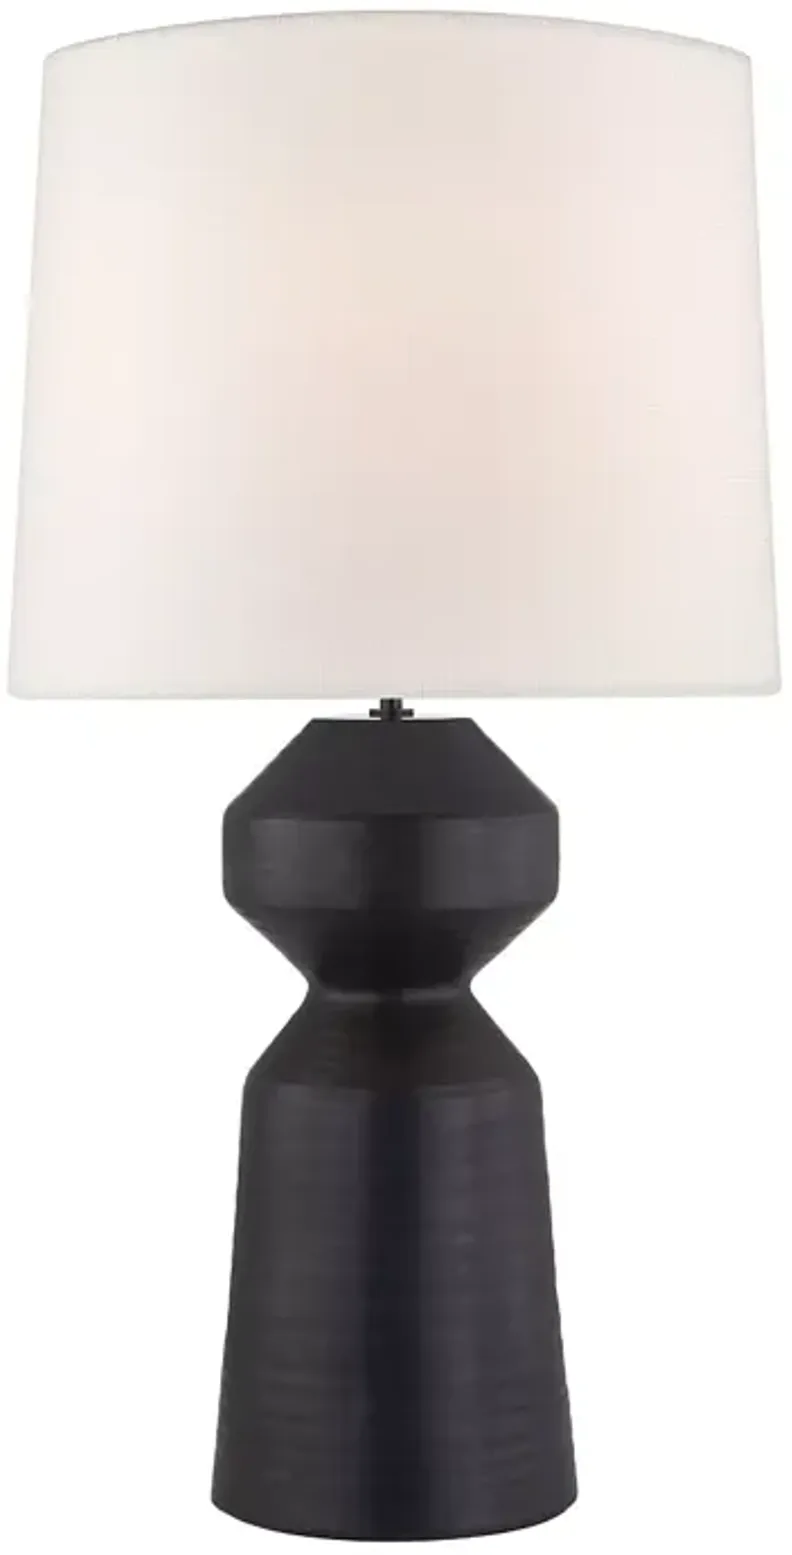 Kelly Wearstler Nero Large Table Lamp